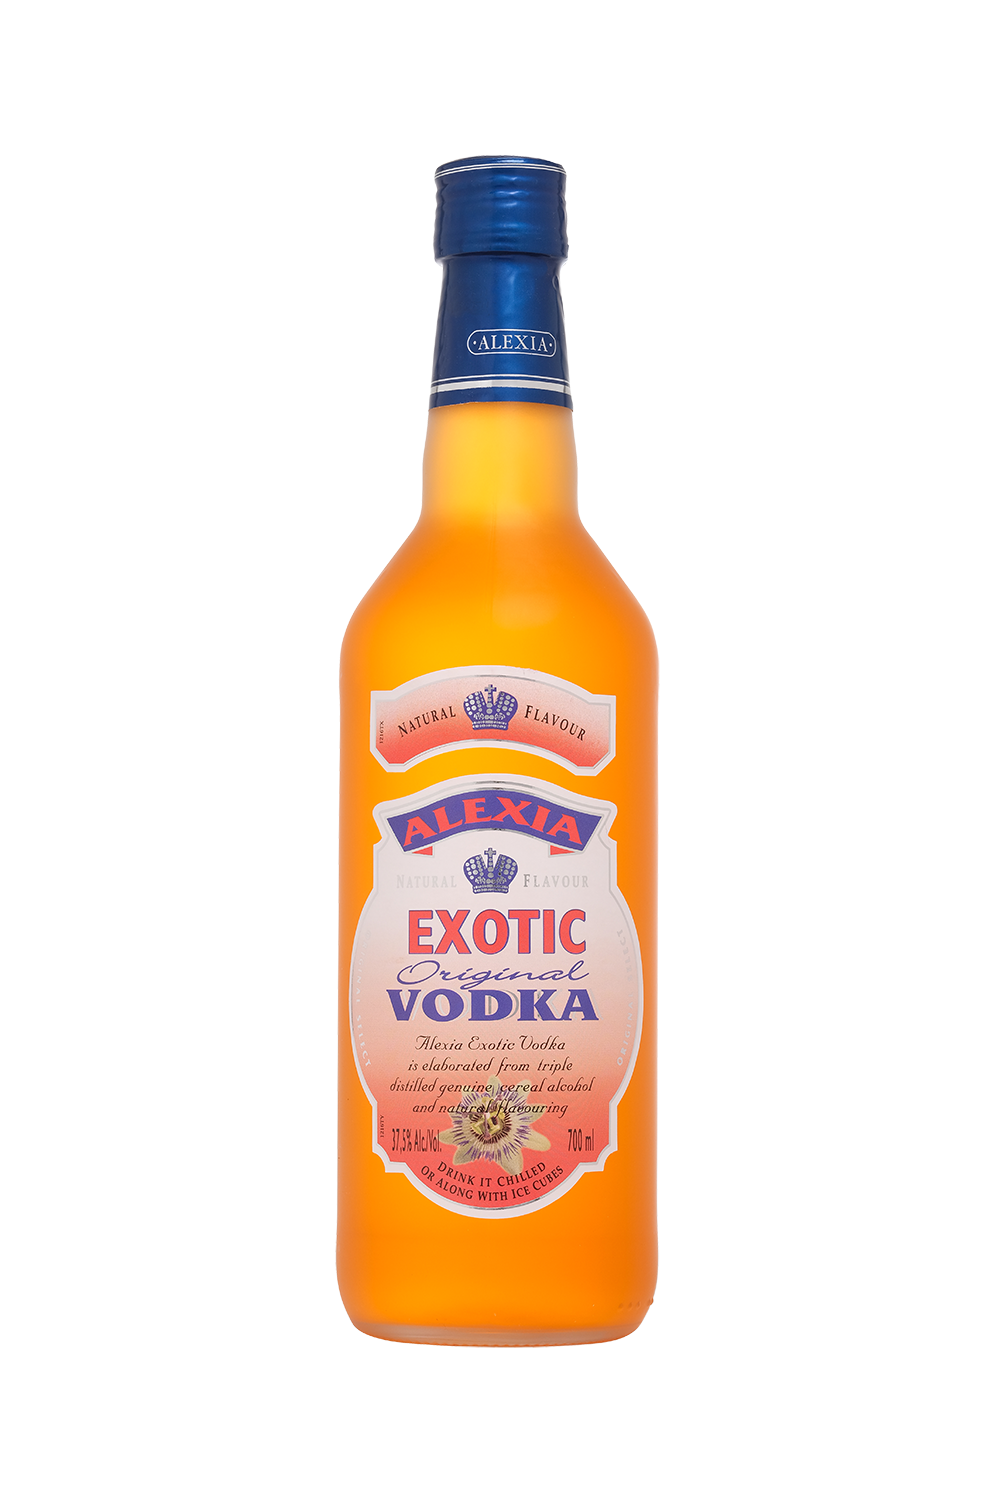 Vodka Exotic Alexia 070 37.5 0V6J Web